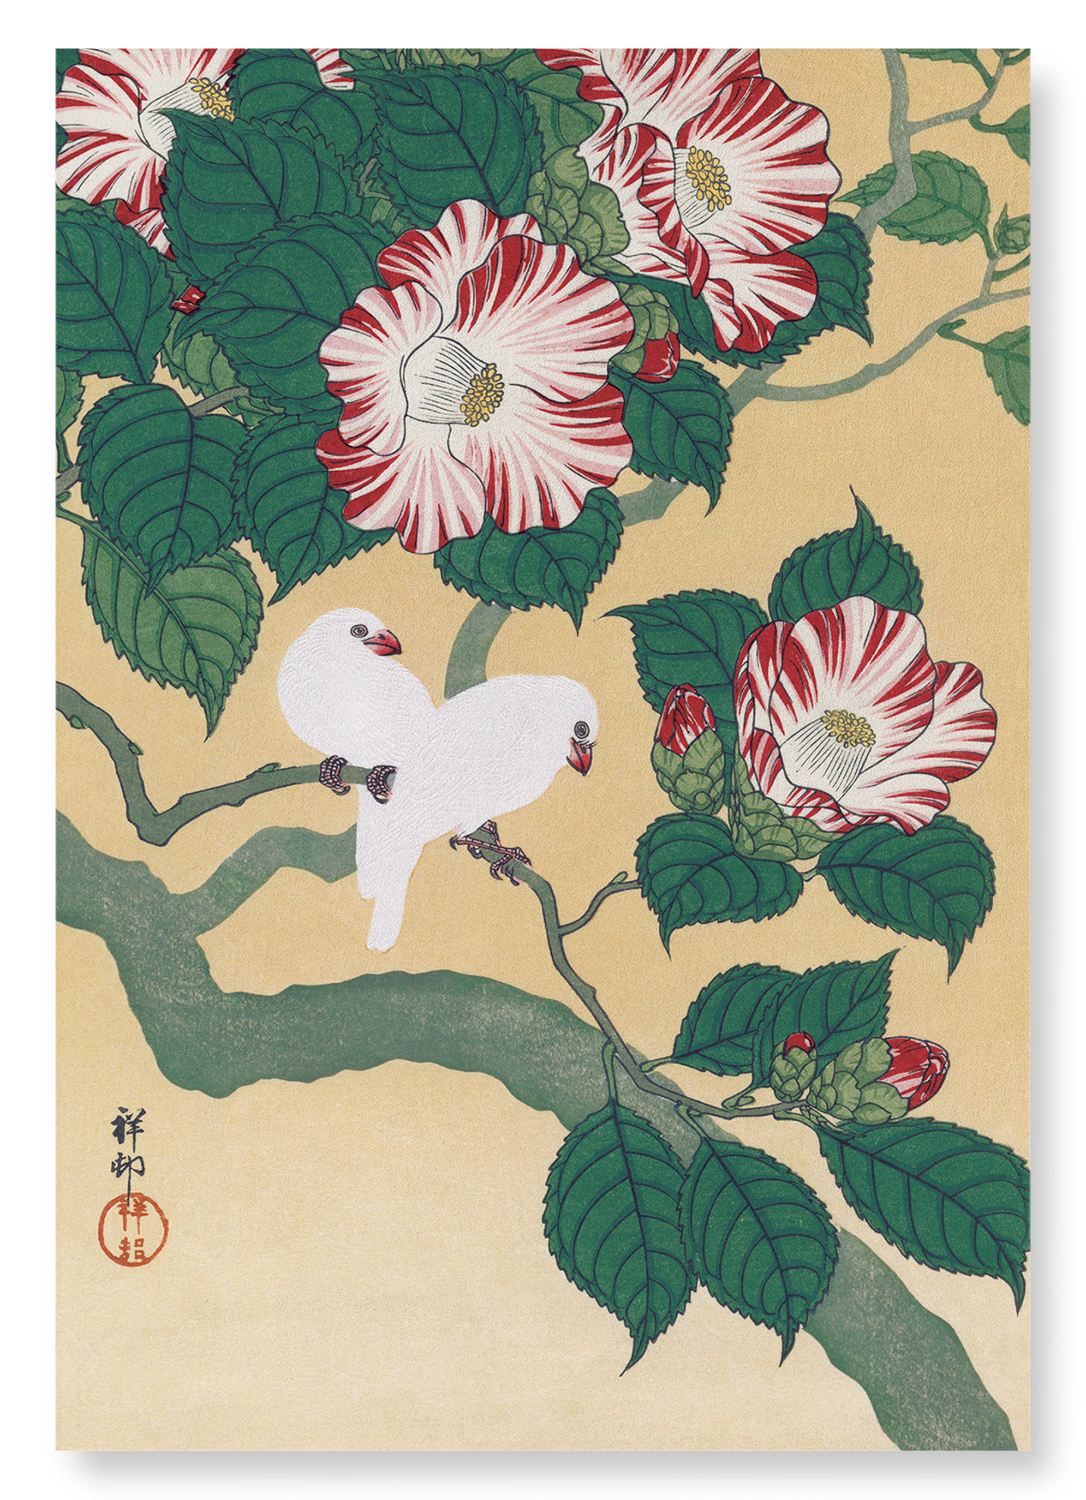 RICE BIRDS AND CAMELLIA: Japanese Art Print